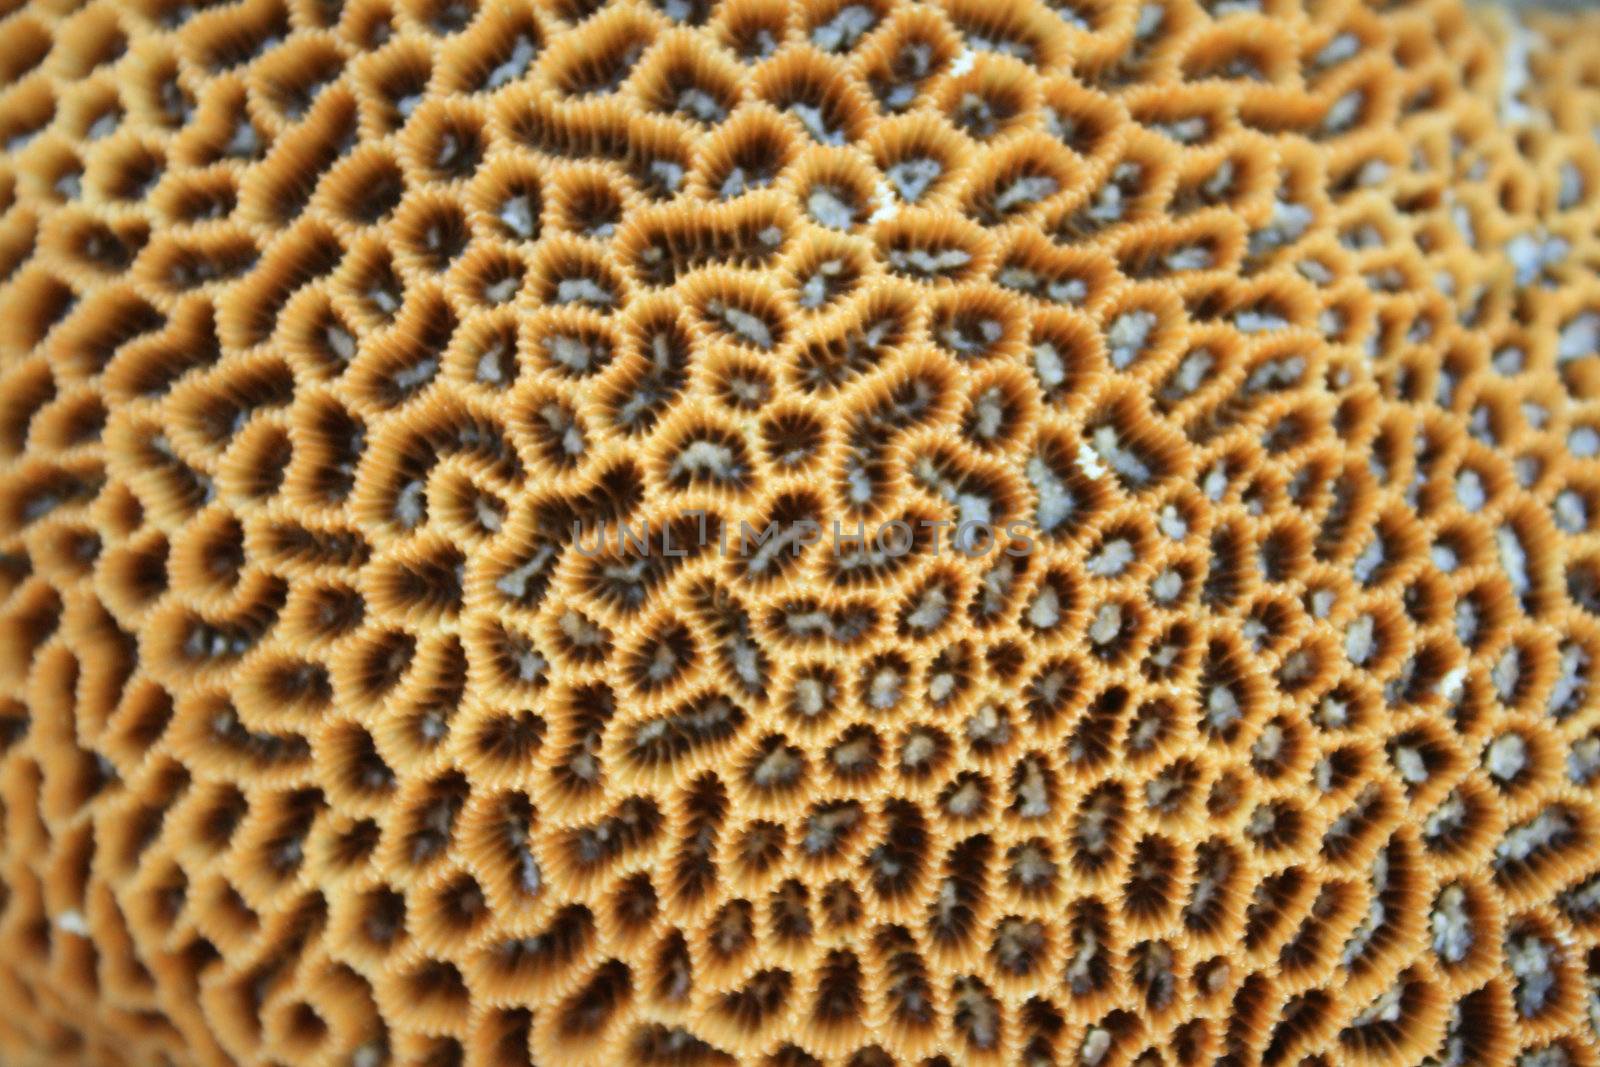 Brain coral by liewluck